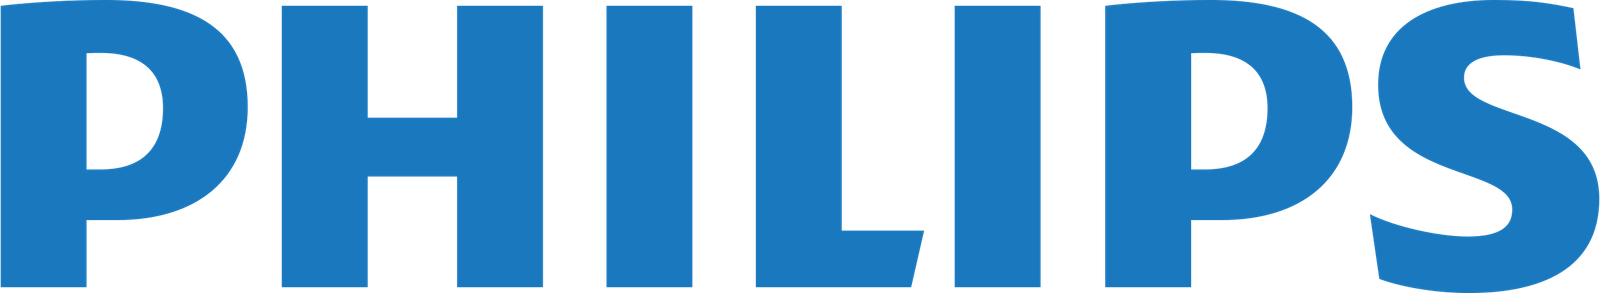 philips-logo-2